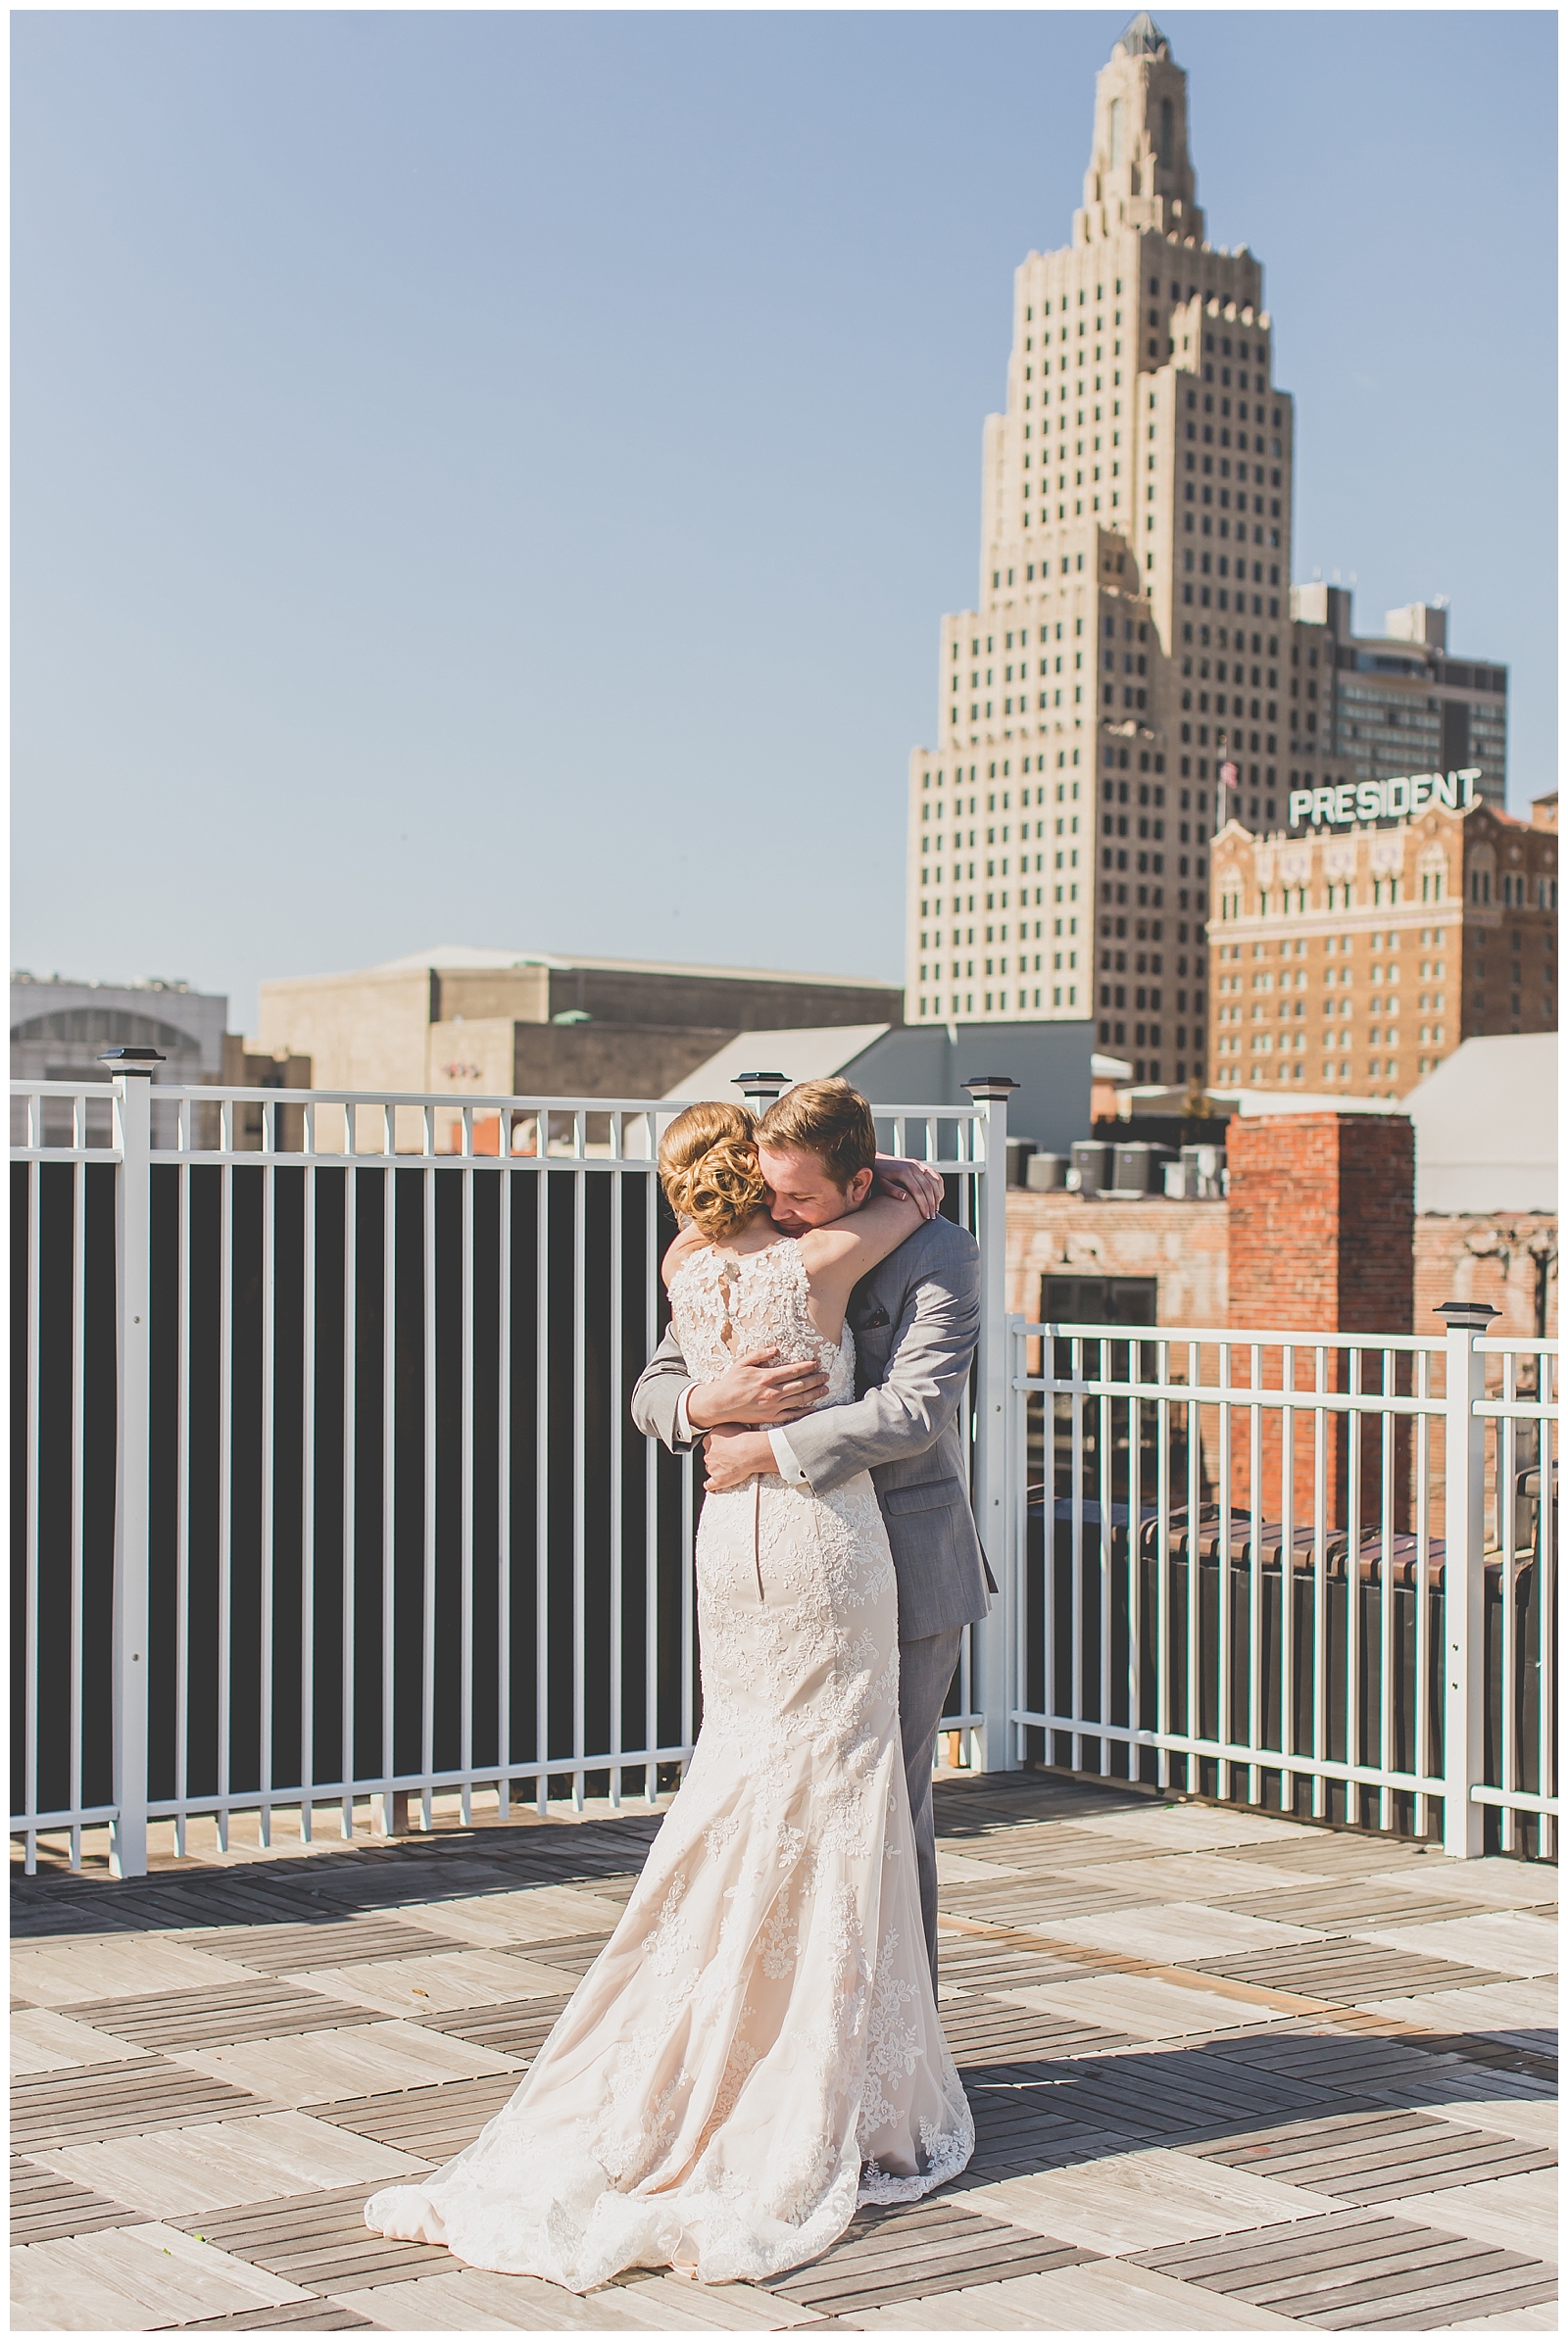 Wedding photography at Terrace on Grand by Kansas City wedding photographers Wisdom-Watson Weddings.